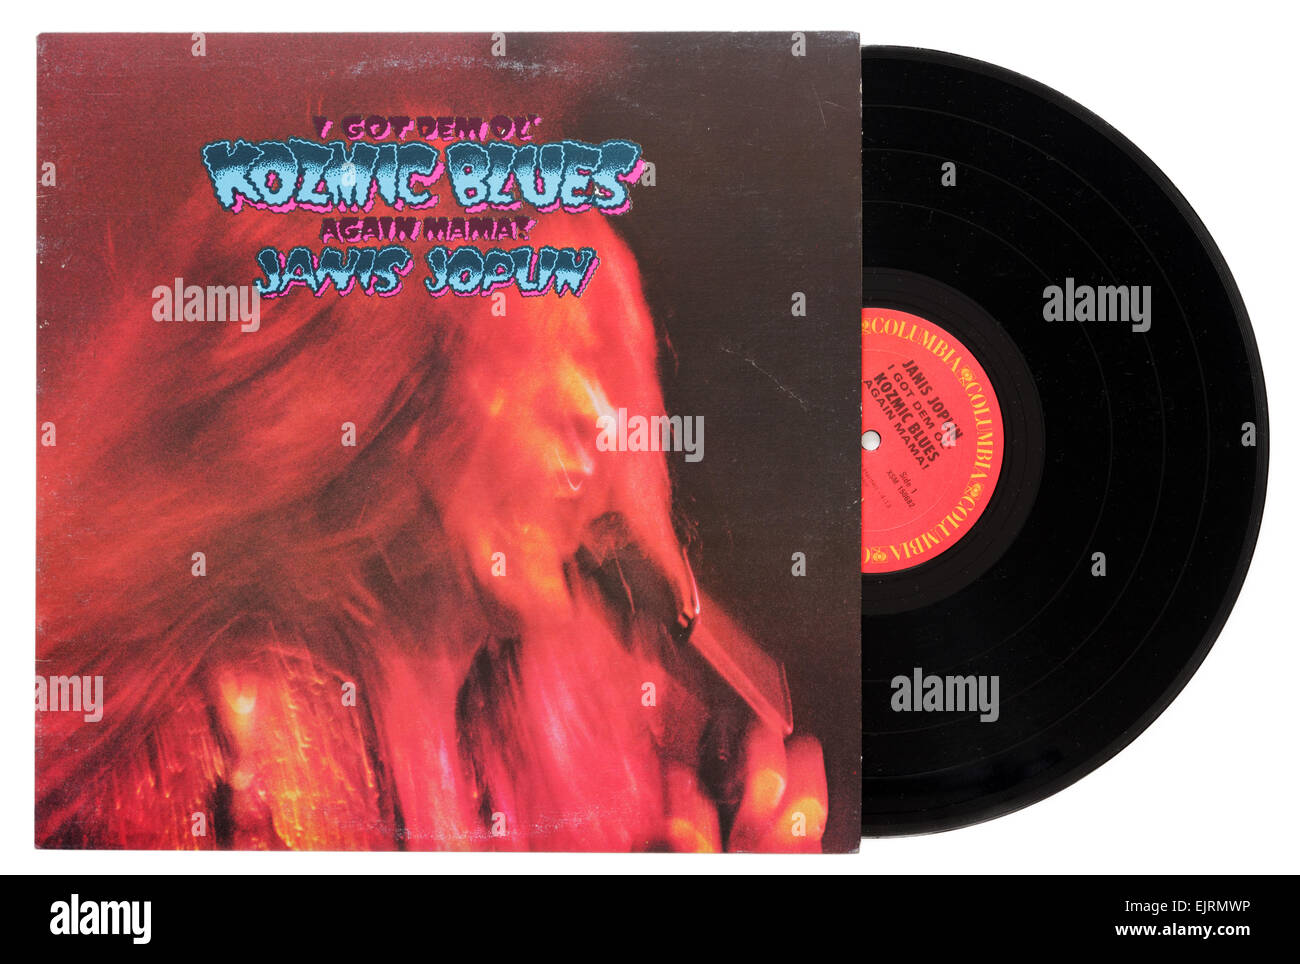 Janis Joplin I Got Dem Old Kozmic Blues again Mama album Stock Photo